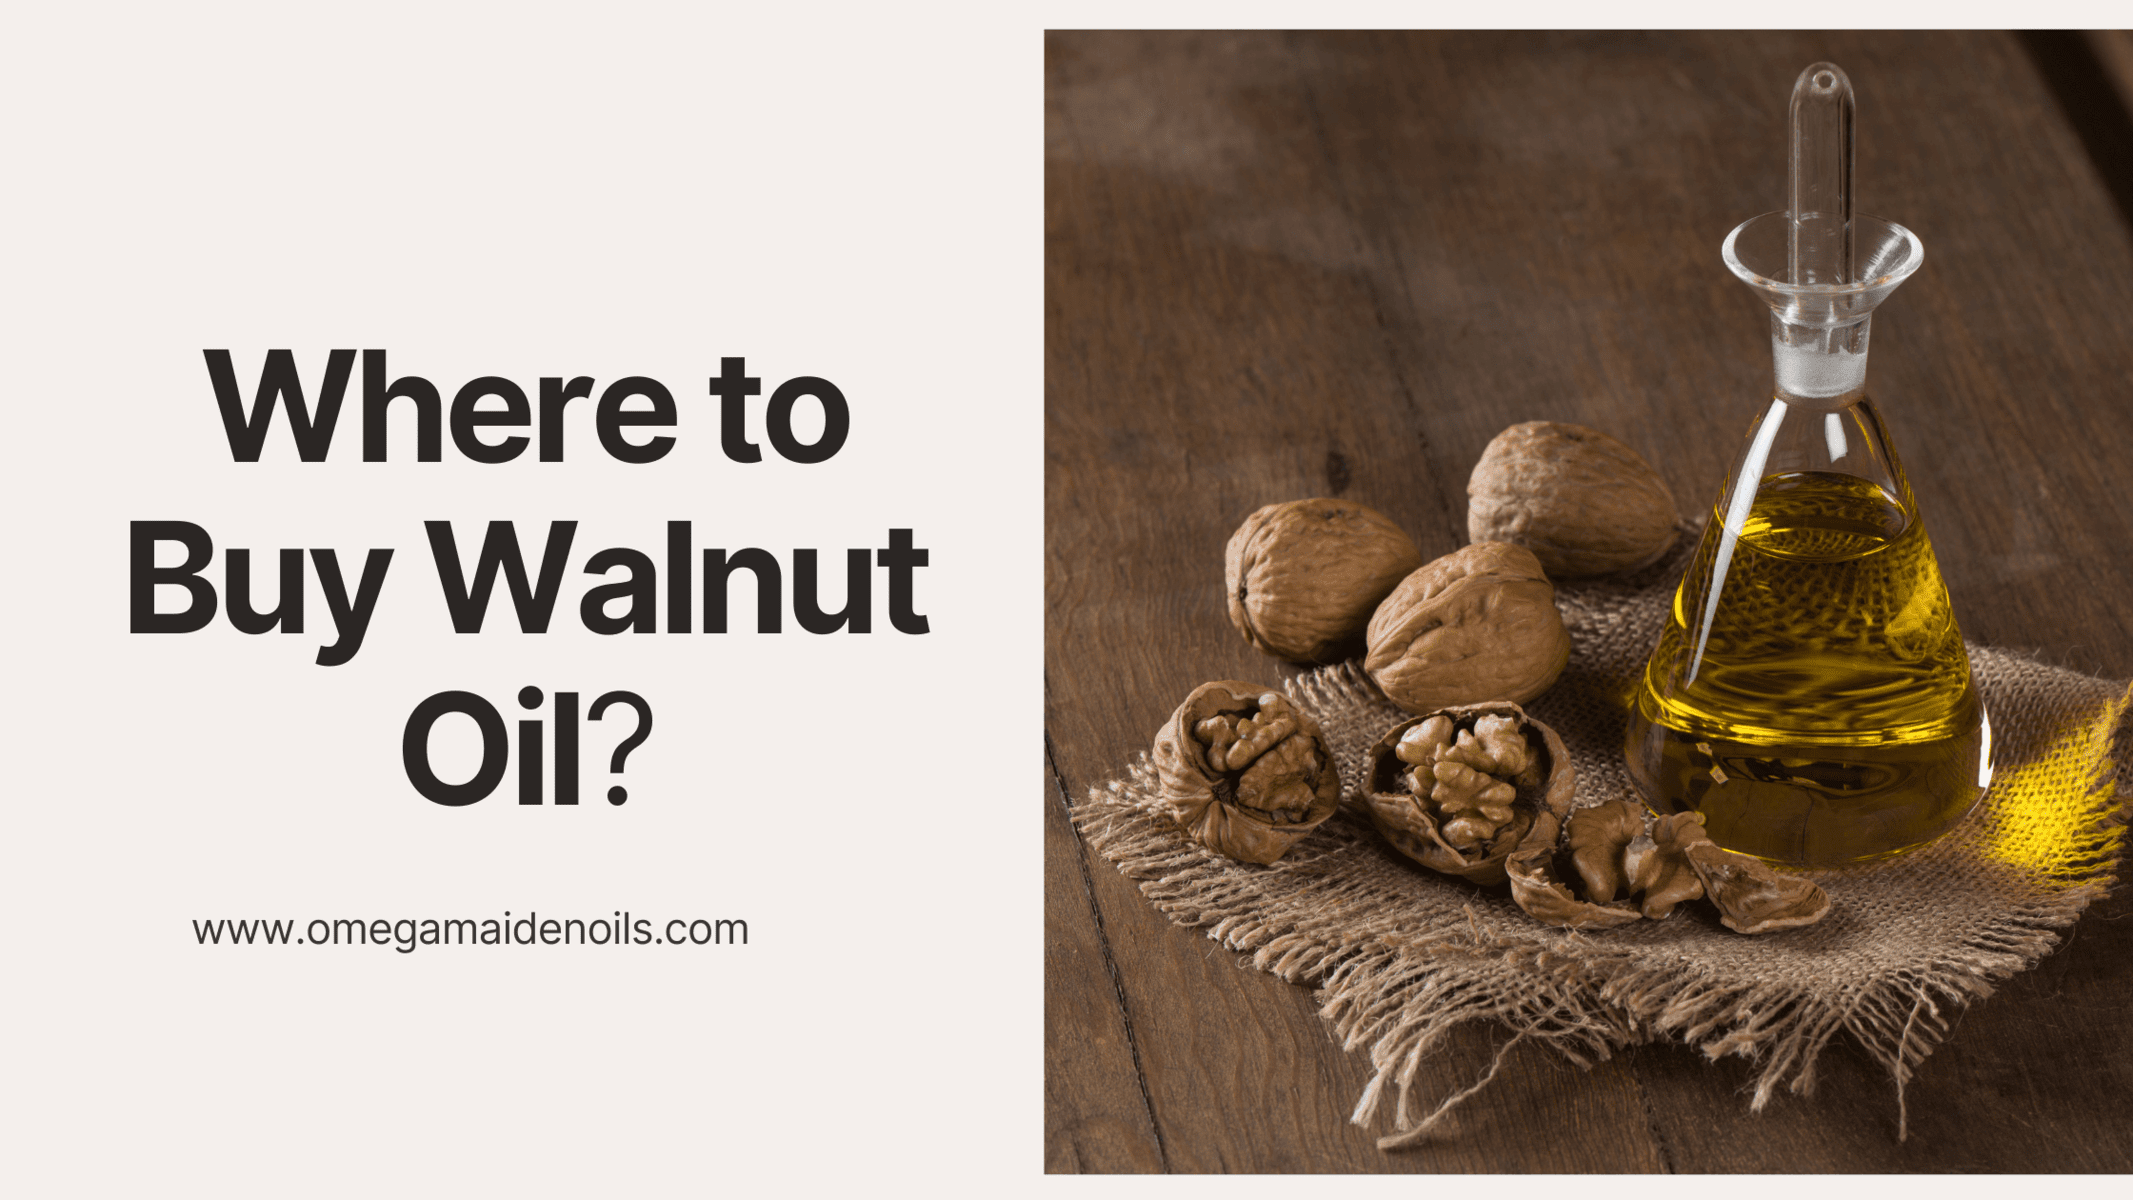 Where to Buy Walnut Oil